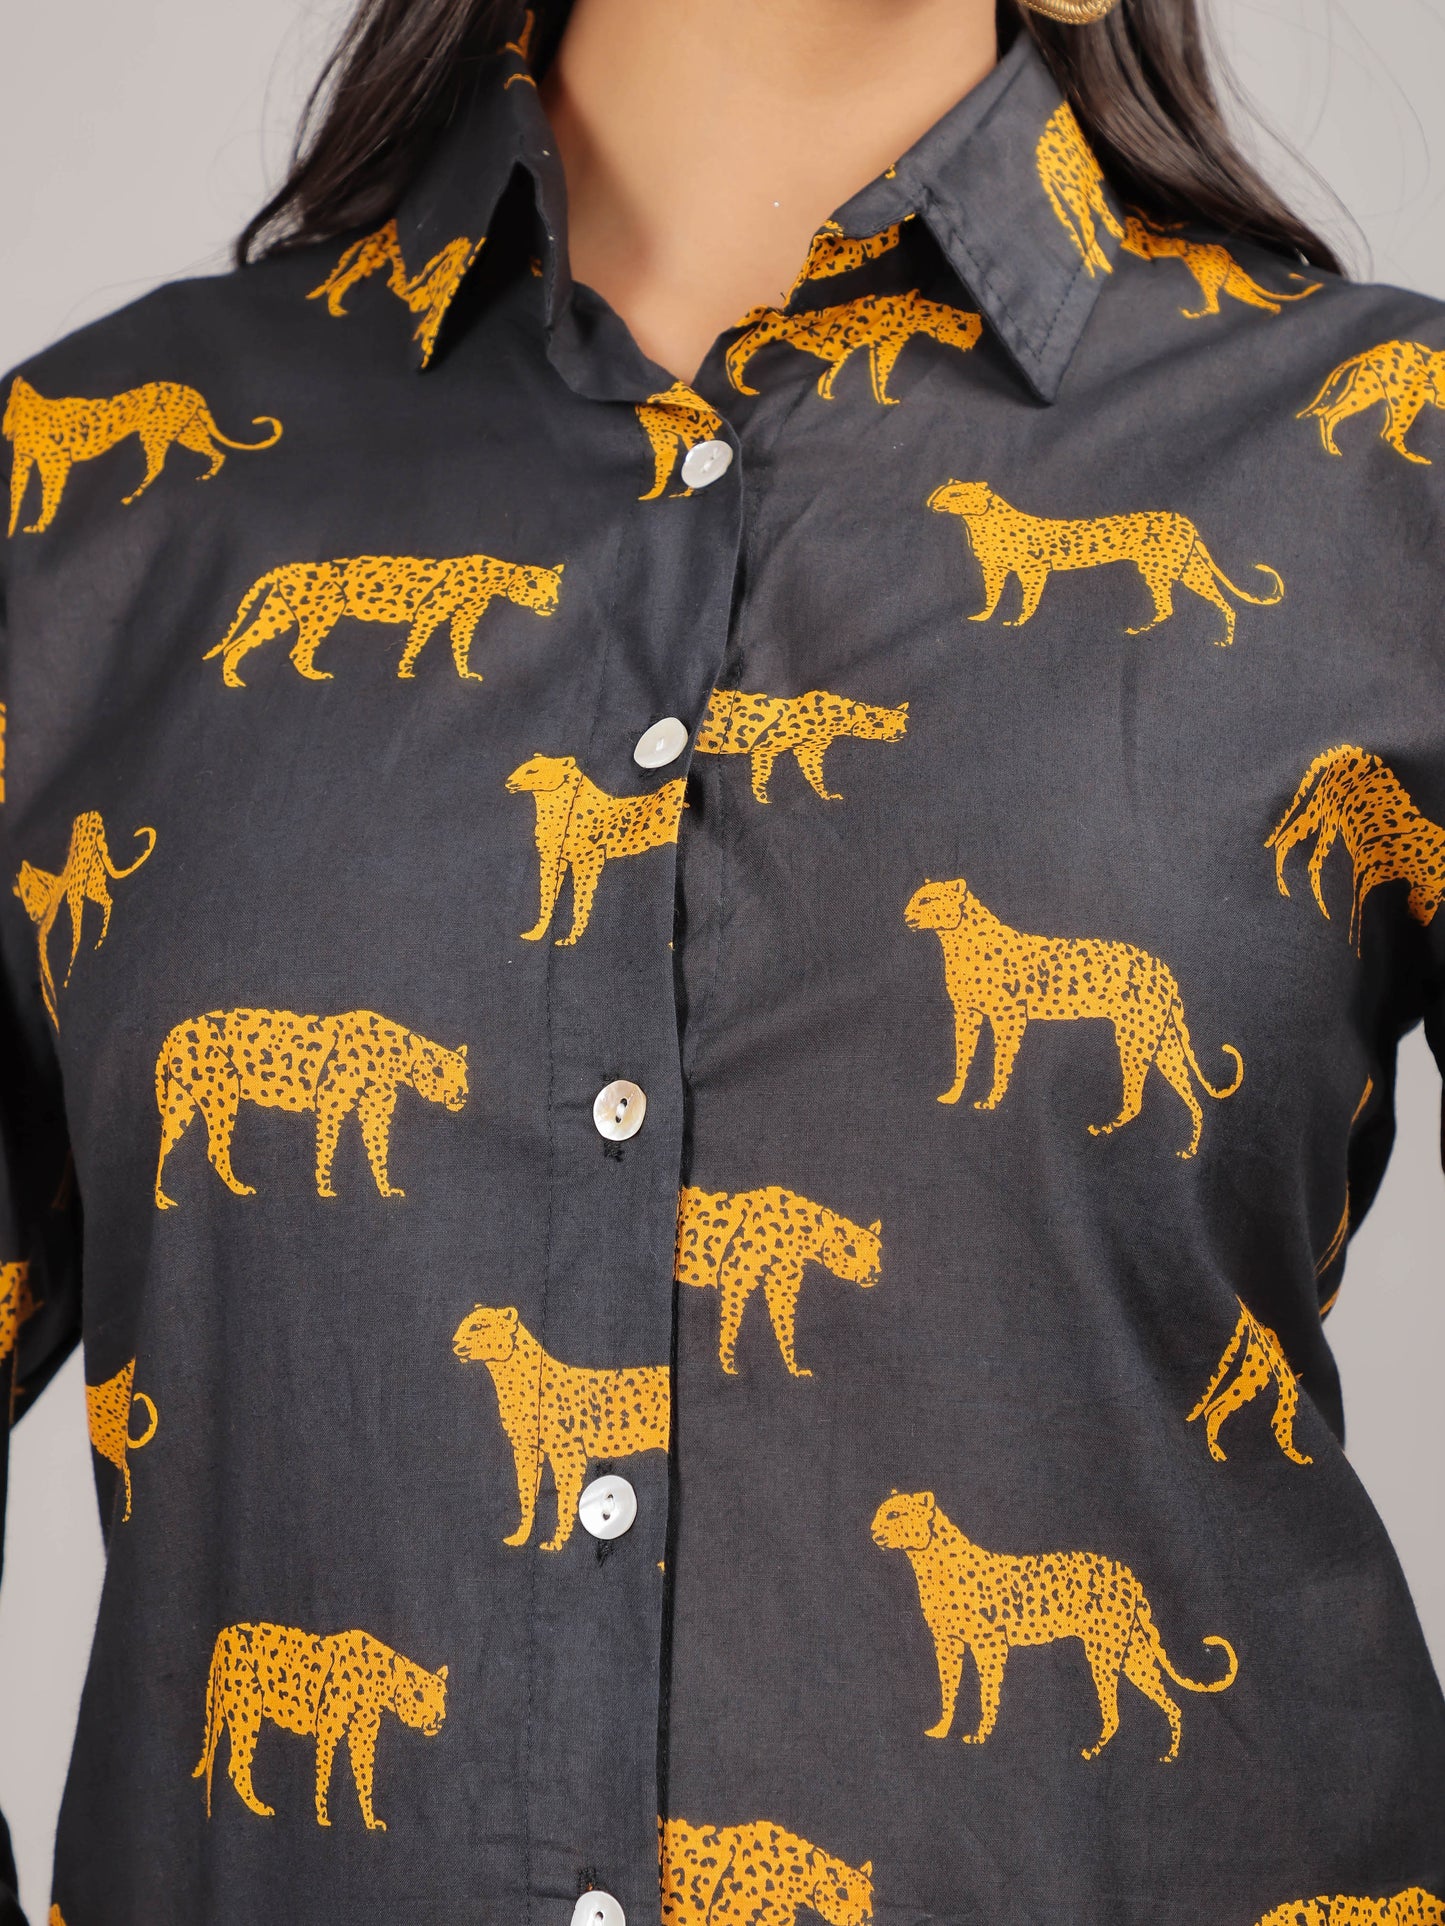 Cheetah Print on Black Cotton Shirt Set for Women